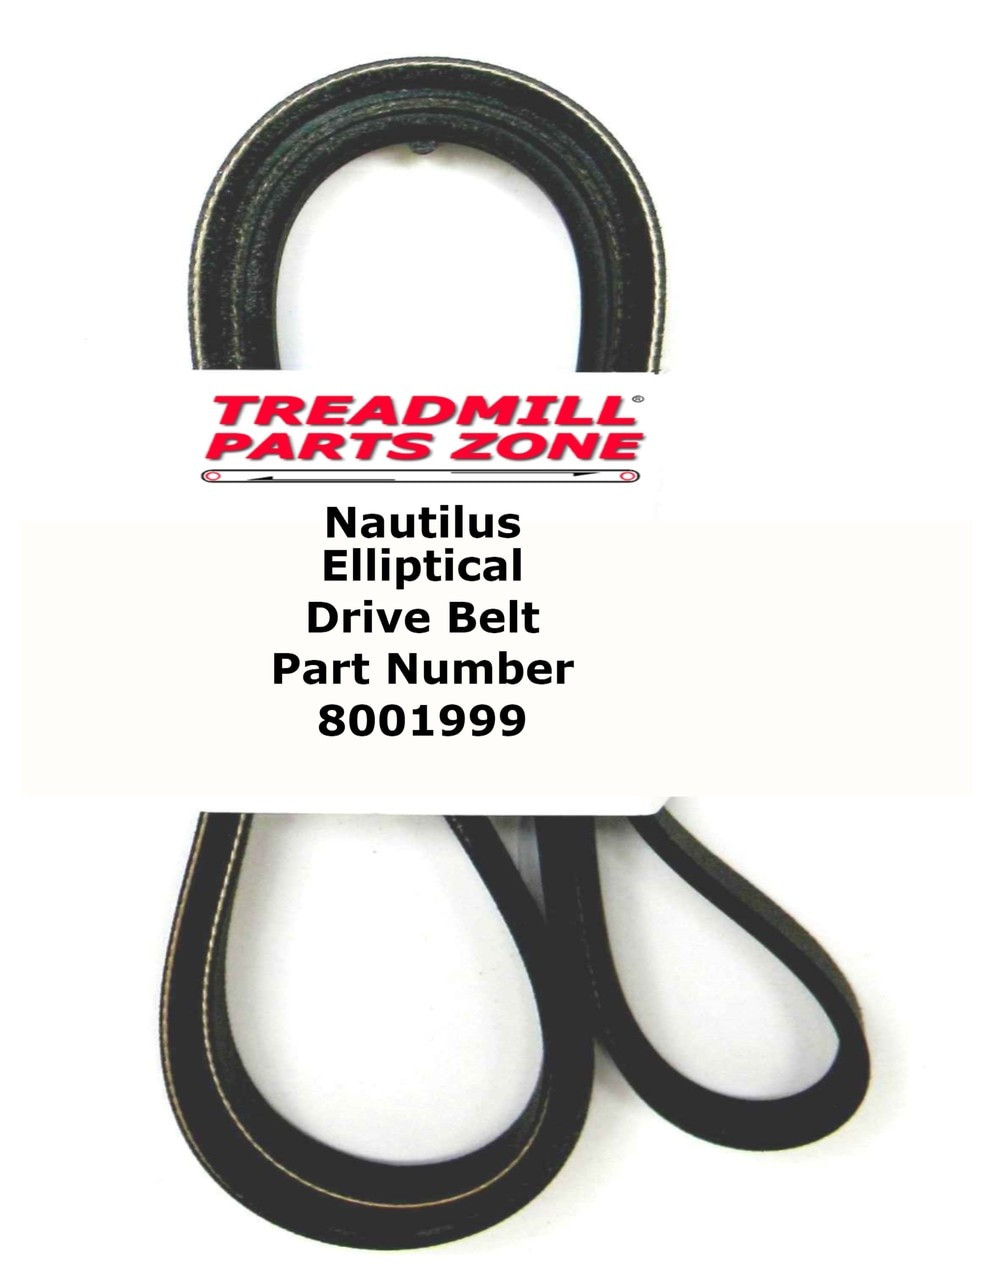 Nautilus Elliptical Model E614 Drive Belt Part Number 8001999